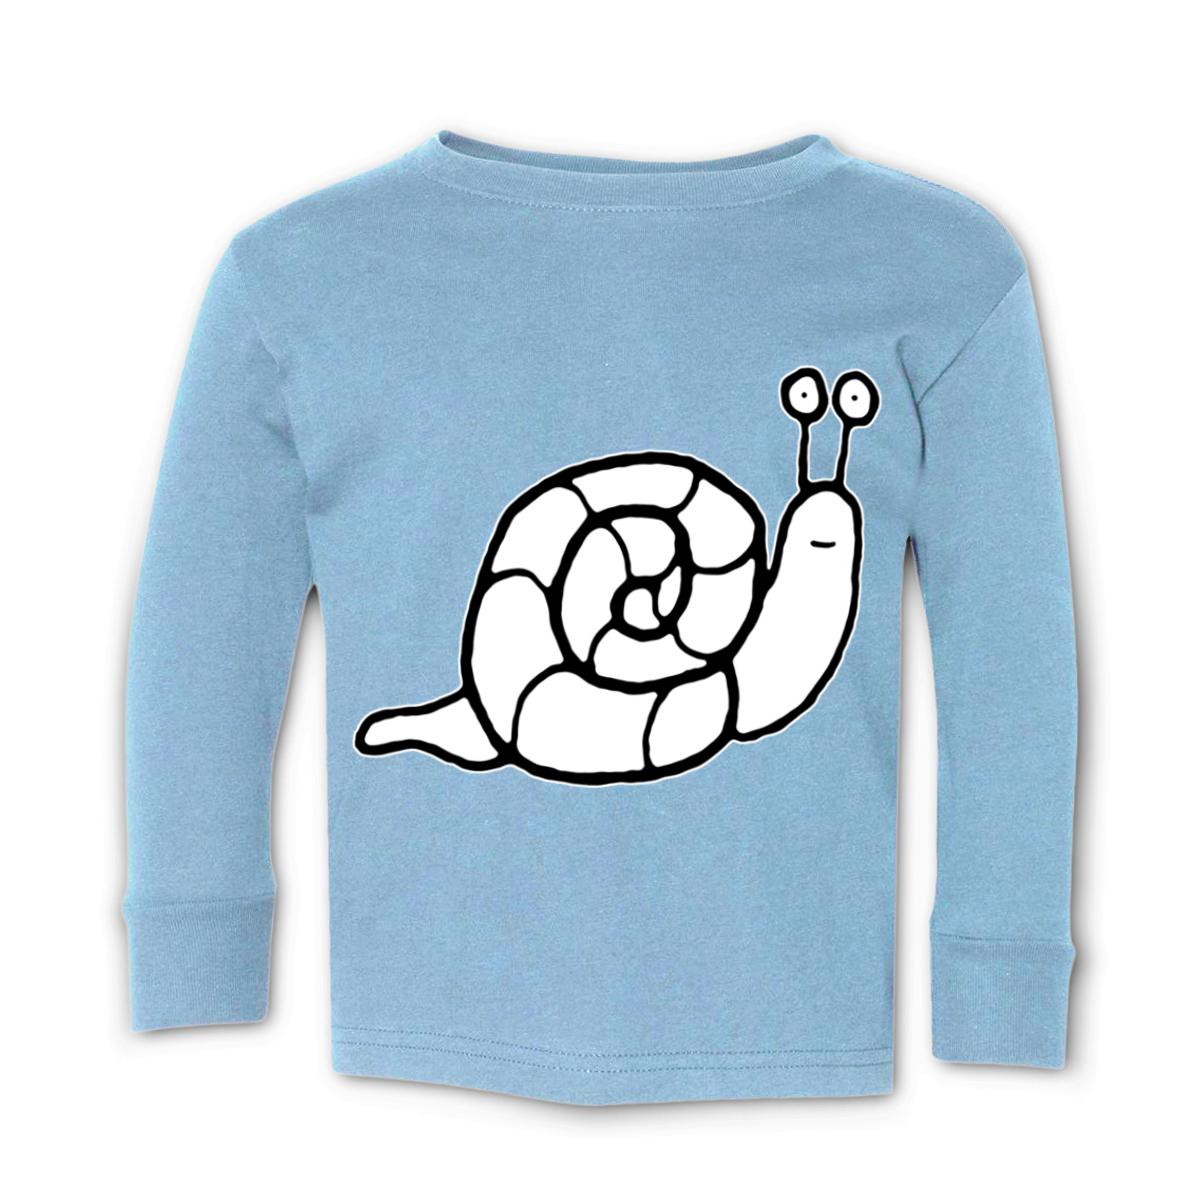 Snail Toddler Long Sleeve Tee 4T light-blue